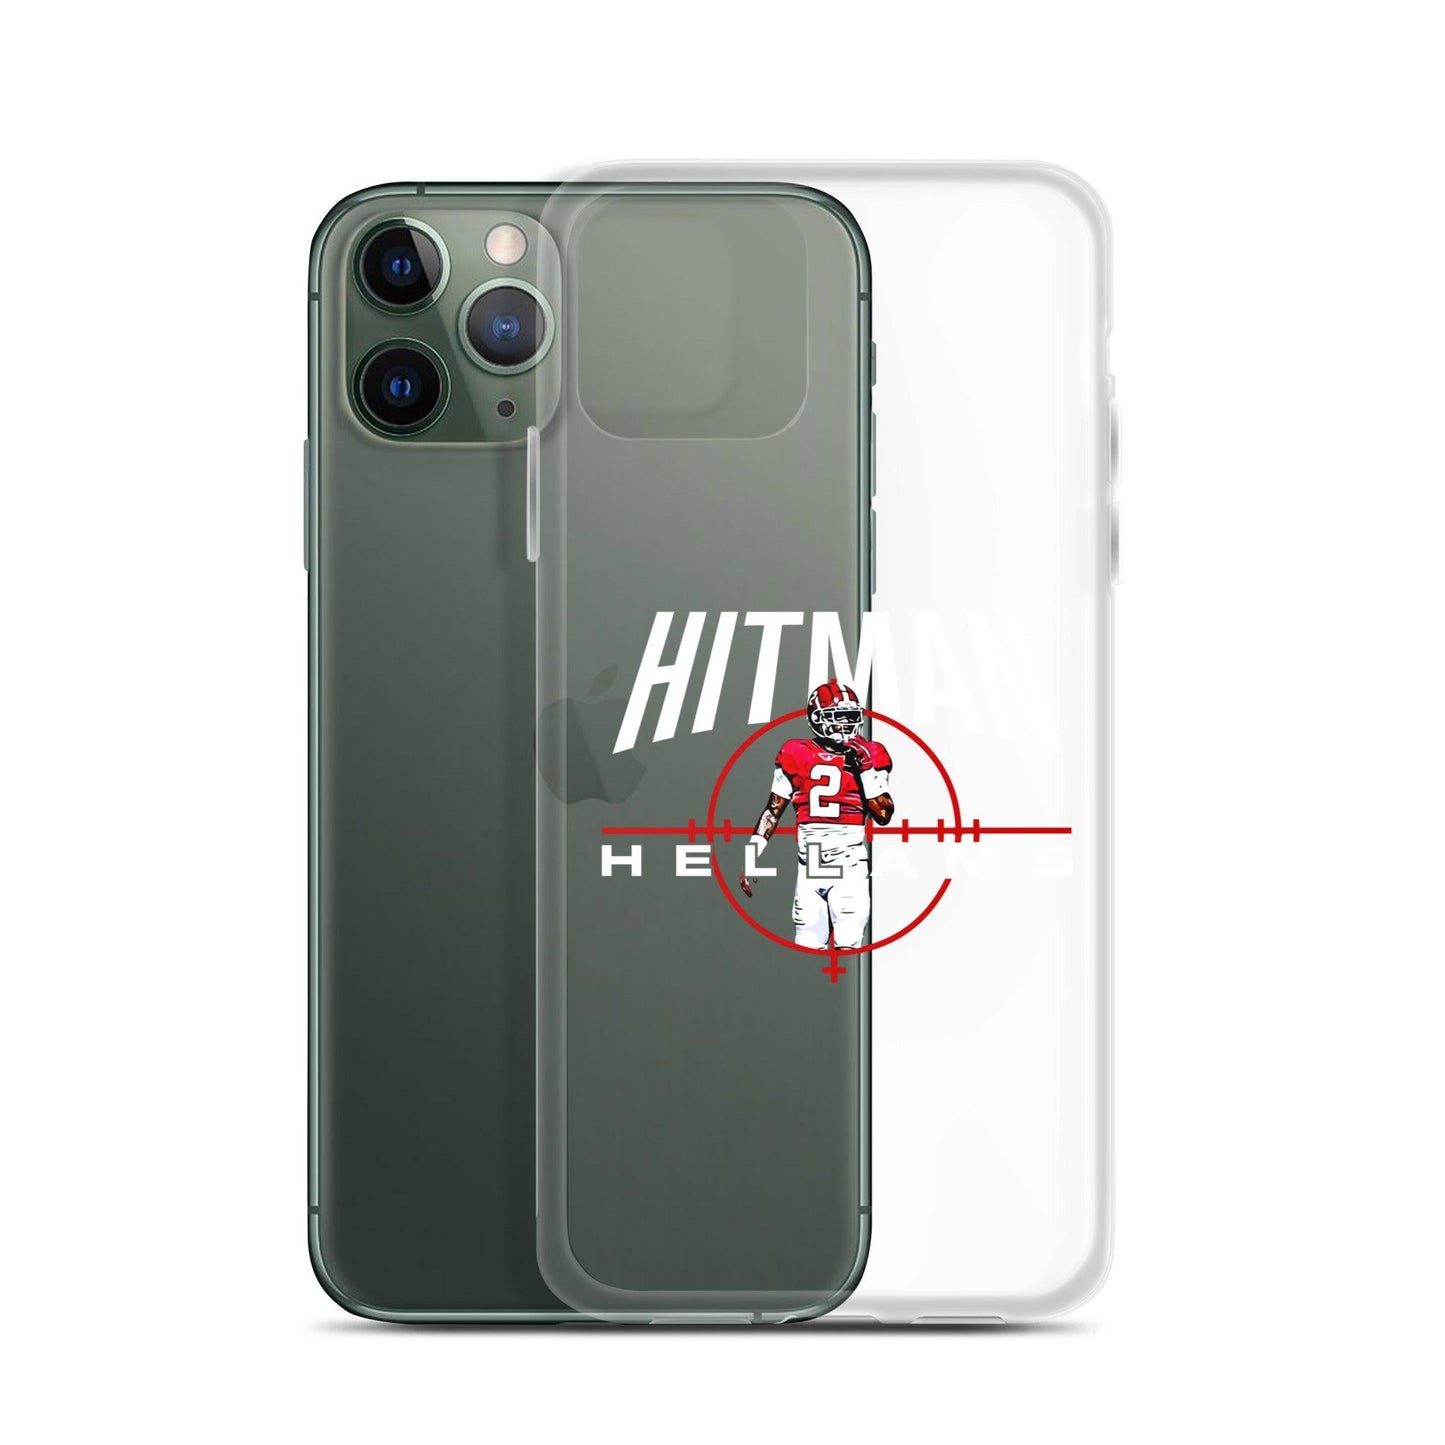 DeMarcco Hellams "Hitman" iPhone Case - Fan Arch